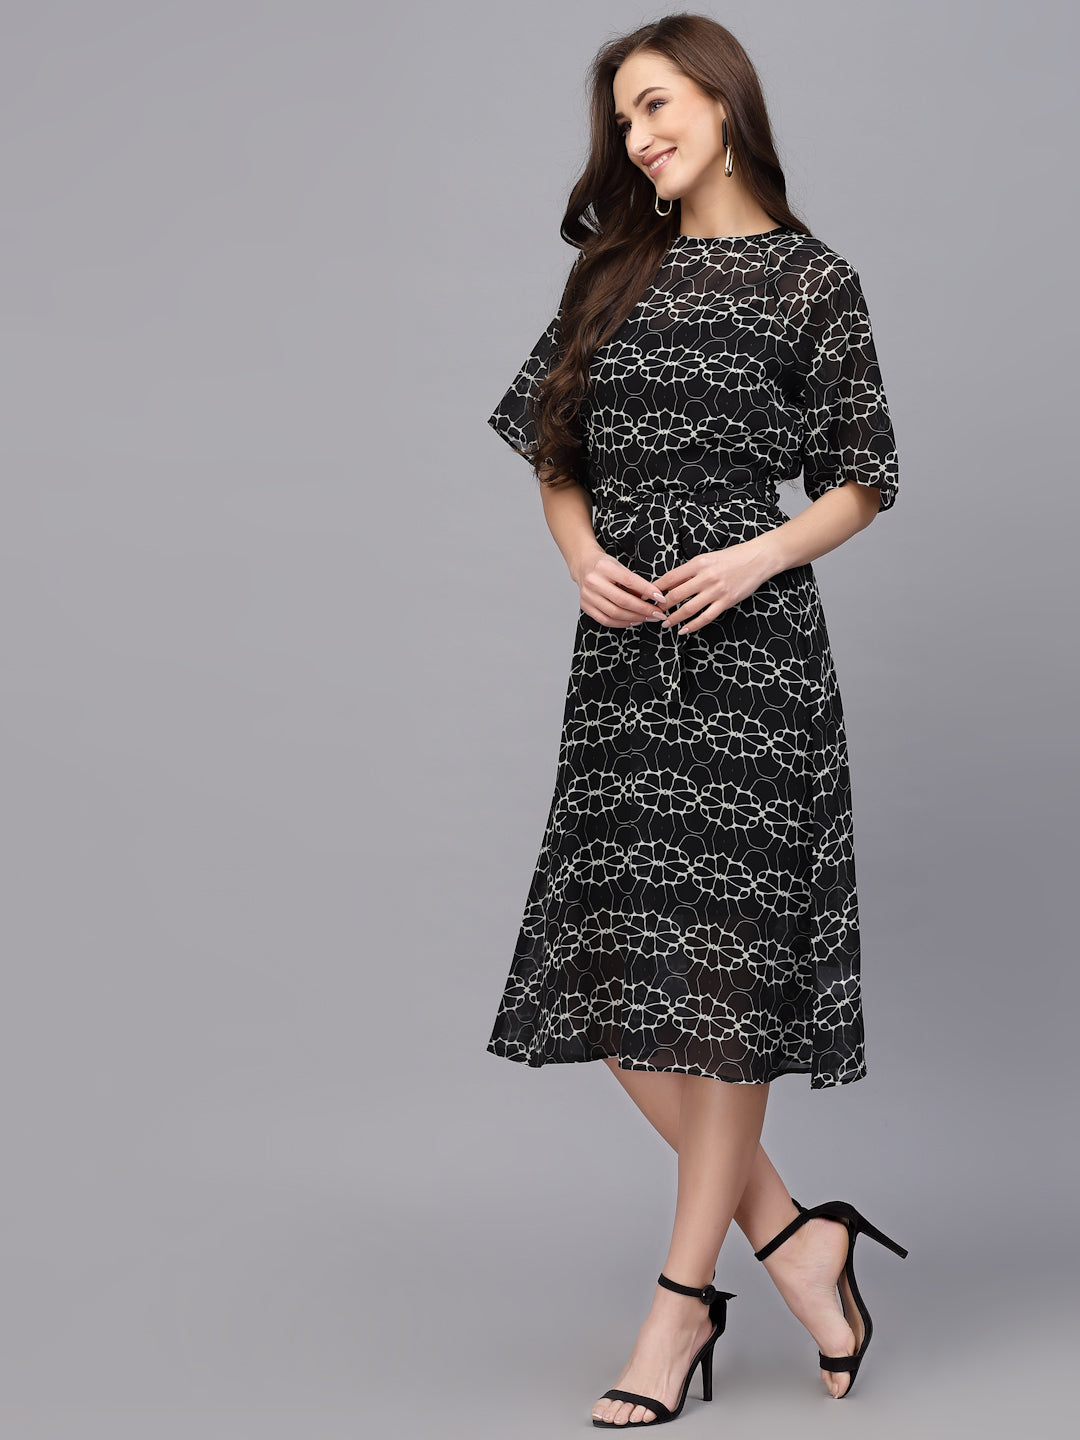 Get Flared Sleeve Detail Black Maxi Dress at ₹ 1699 | LBB Shop